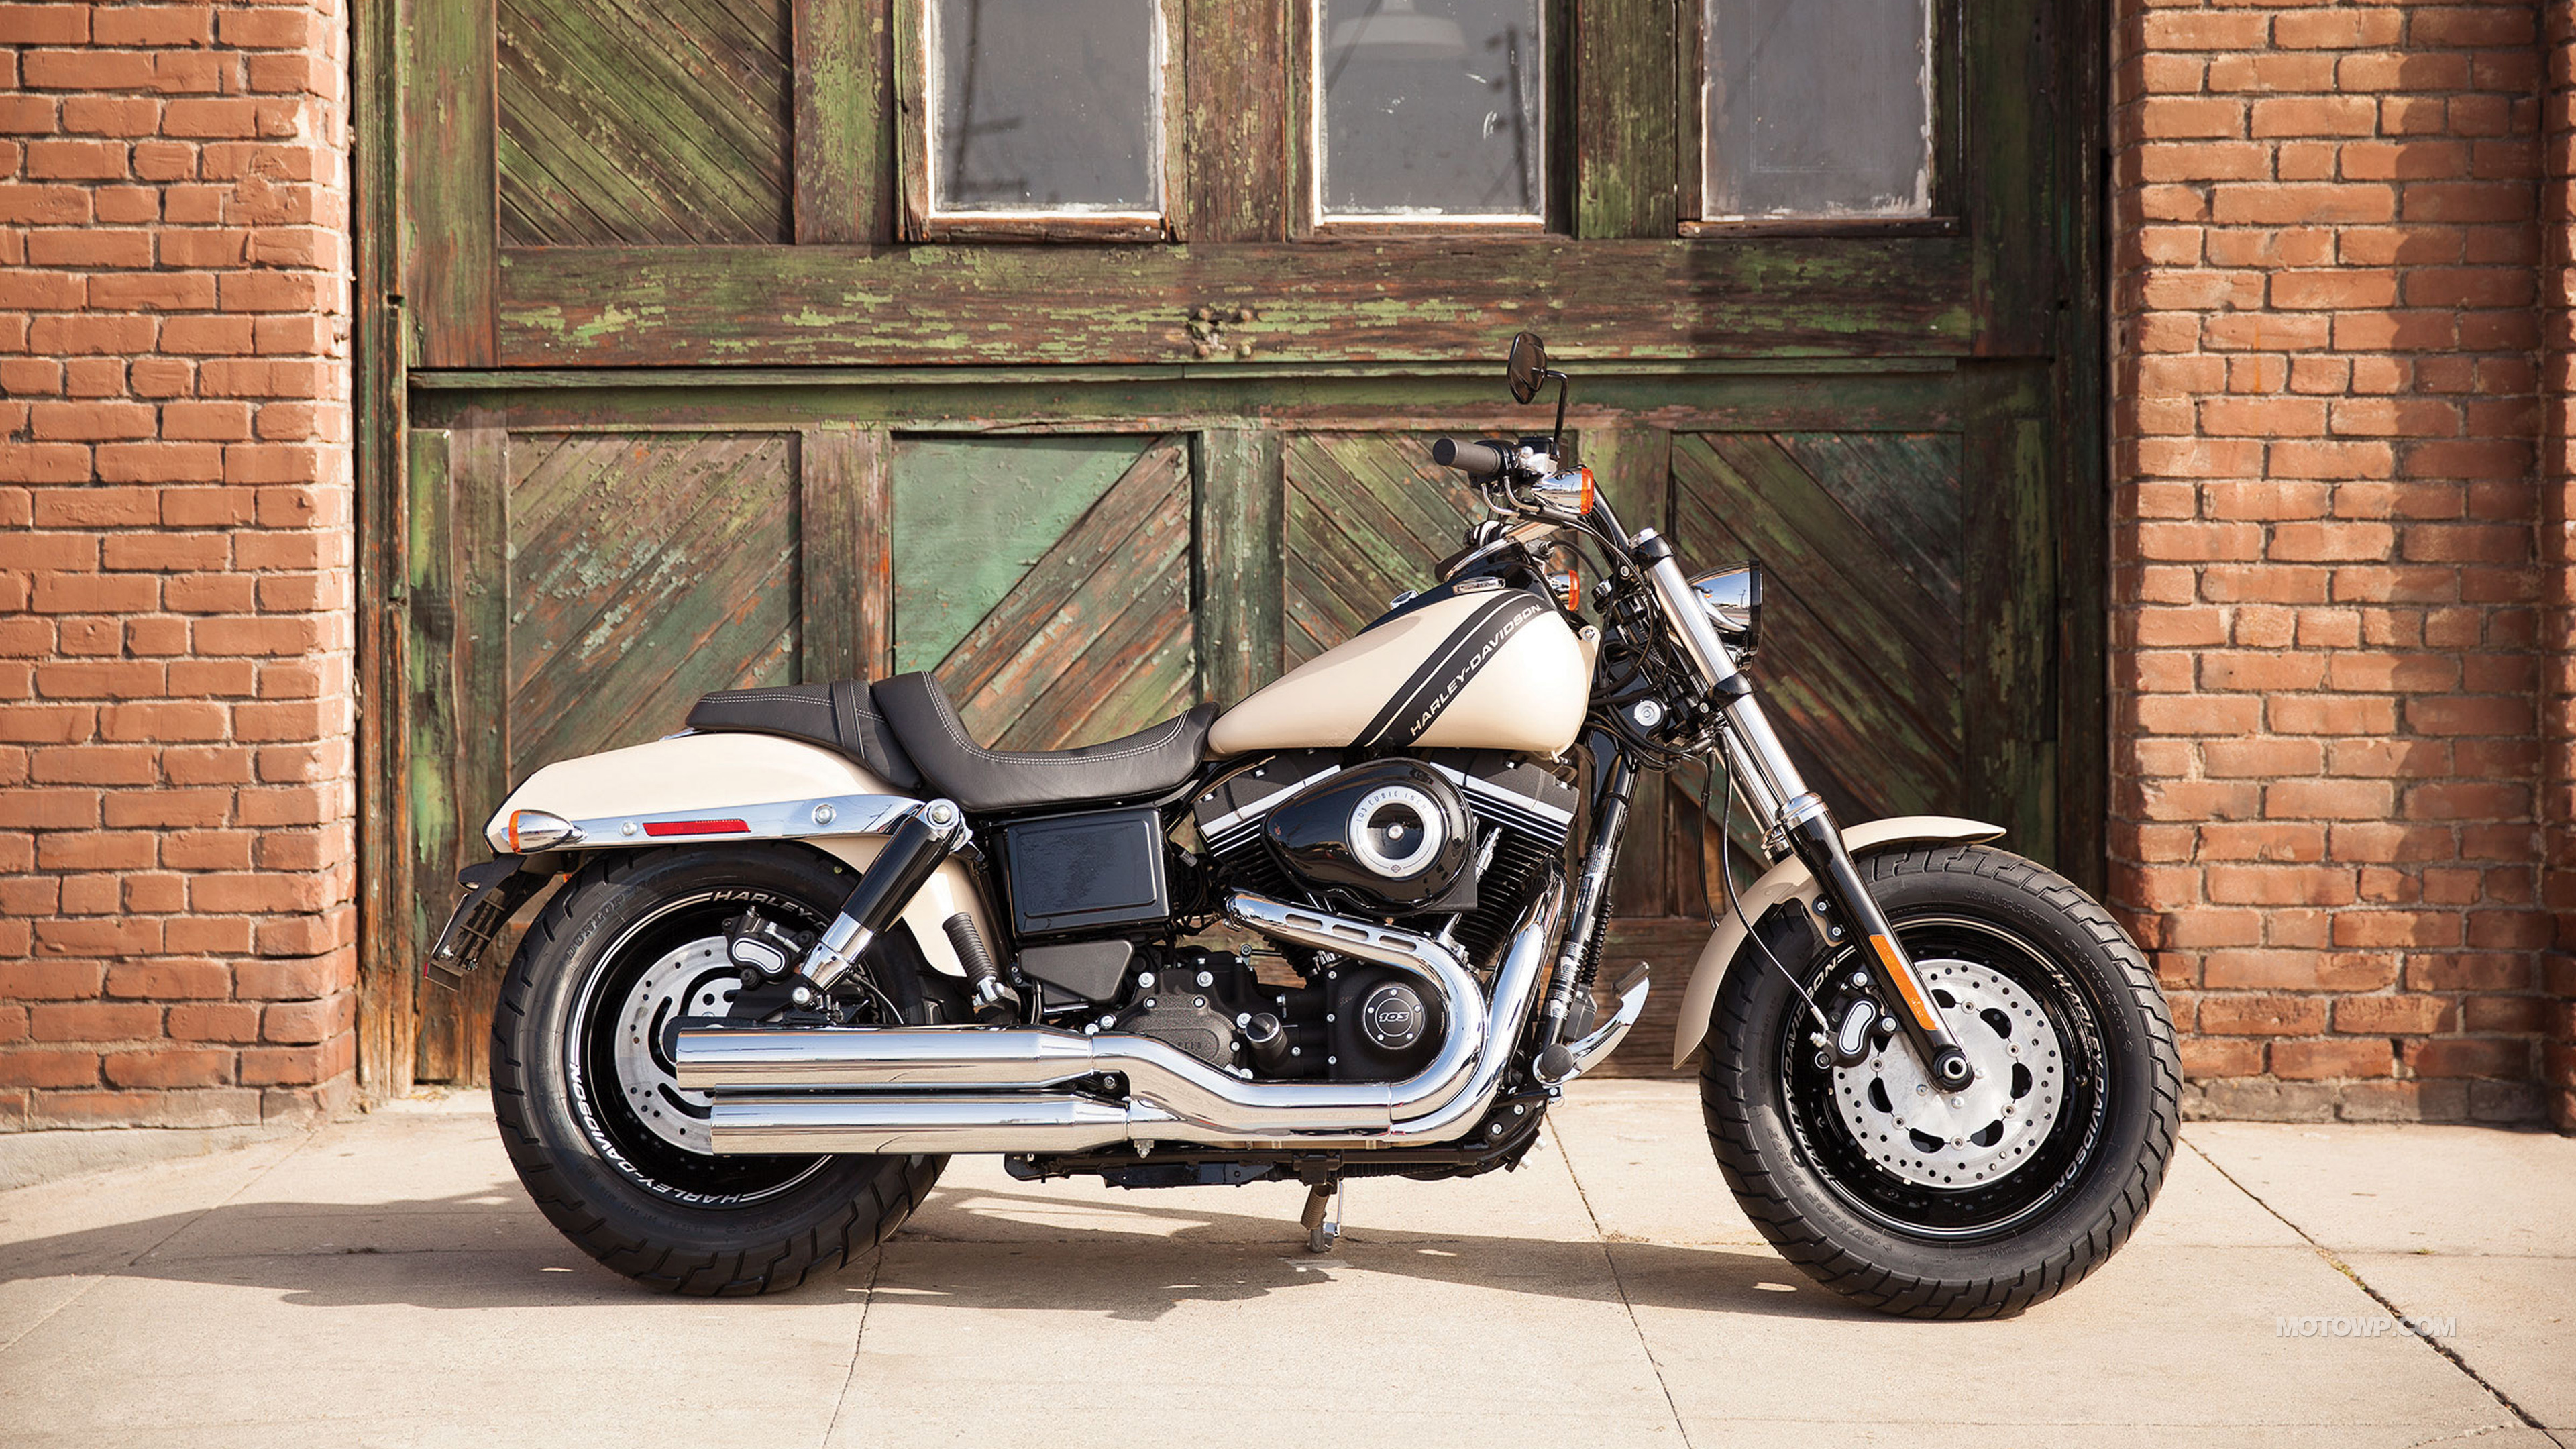 Harley-Davidson Fat Bob Backgrounds, Compatible - PC, Mobile, Gadgets| 3840x2160 px